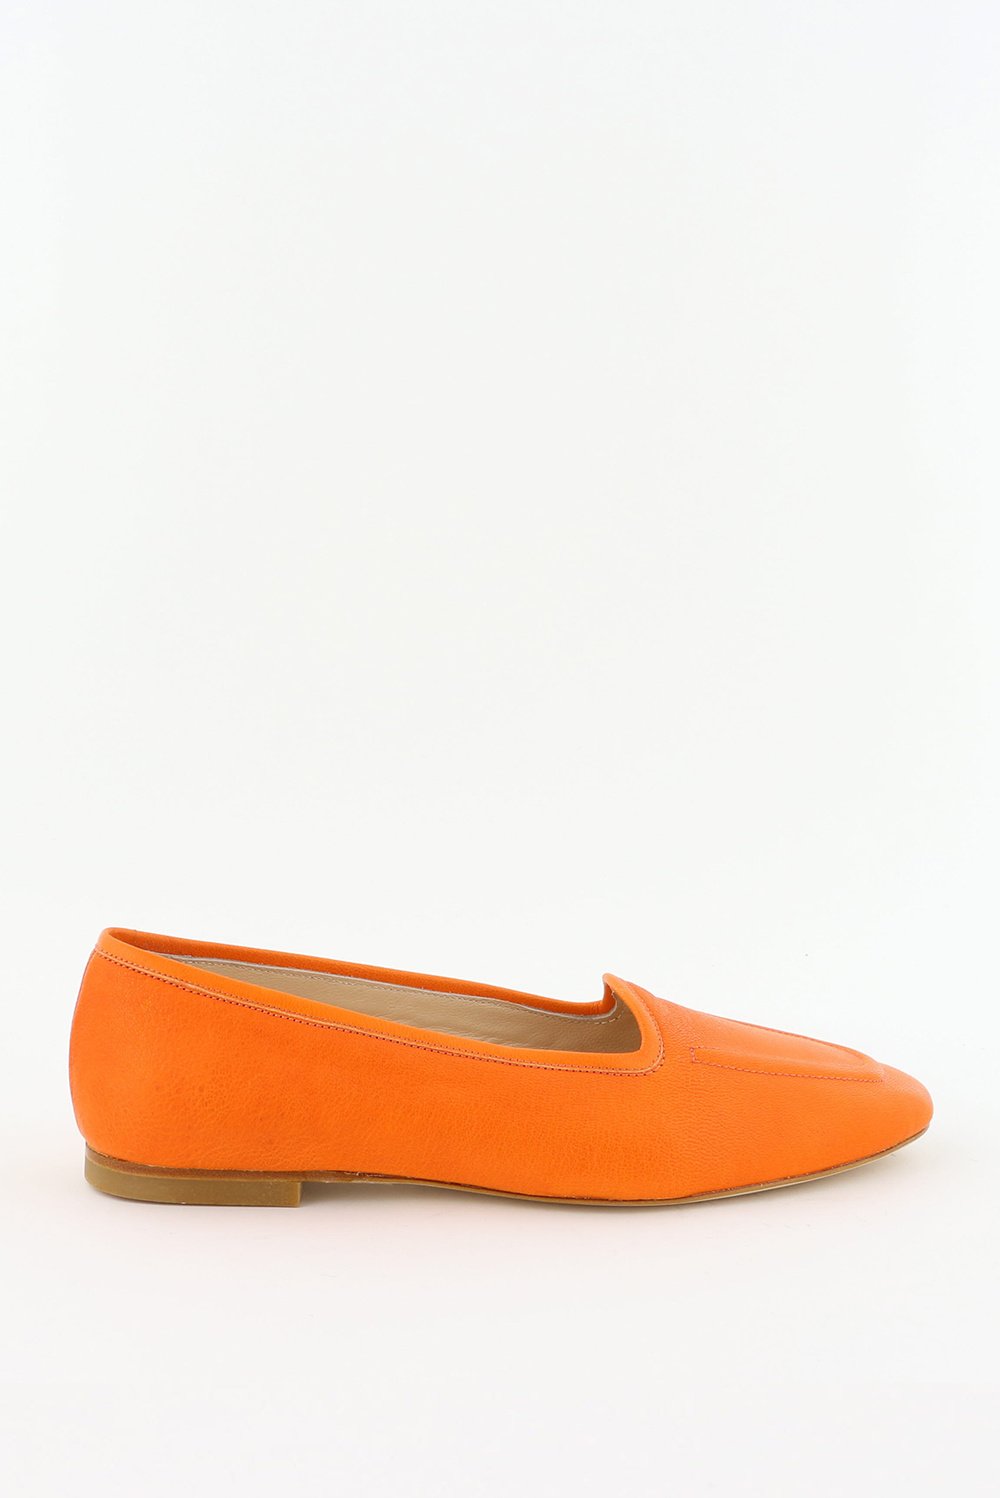 Maryam Nassir Zadeh loafers Pascal 043 oranje